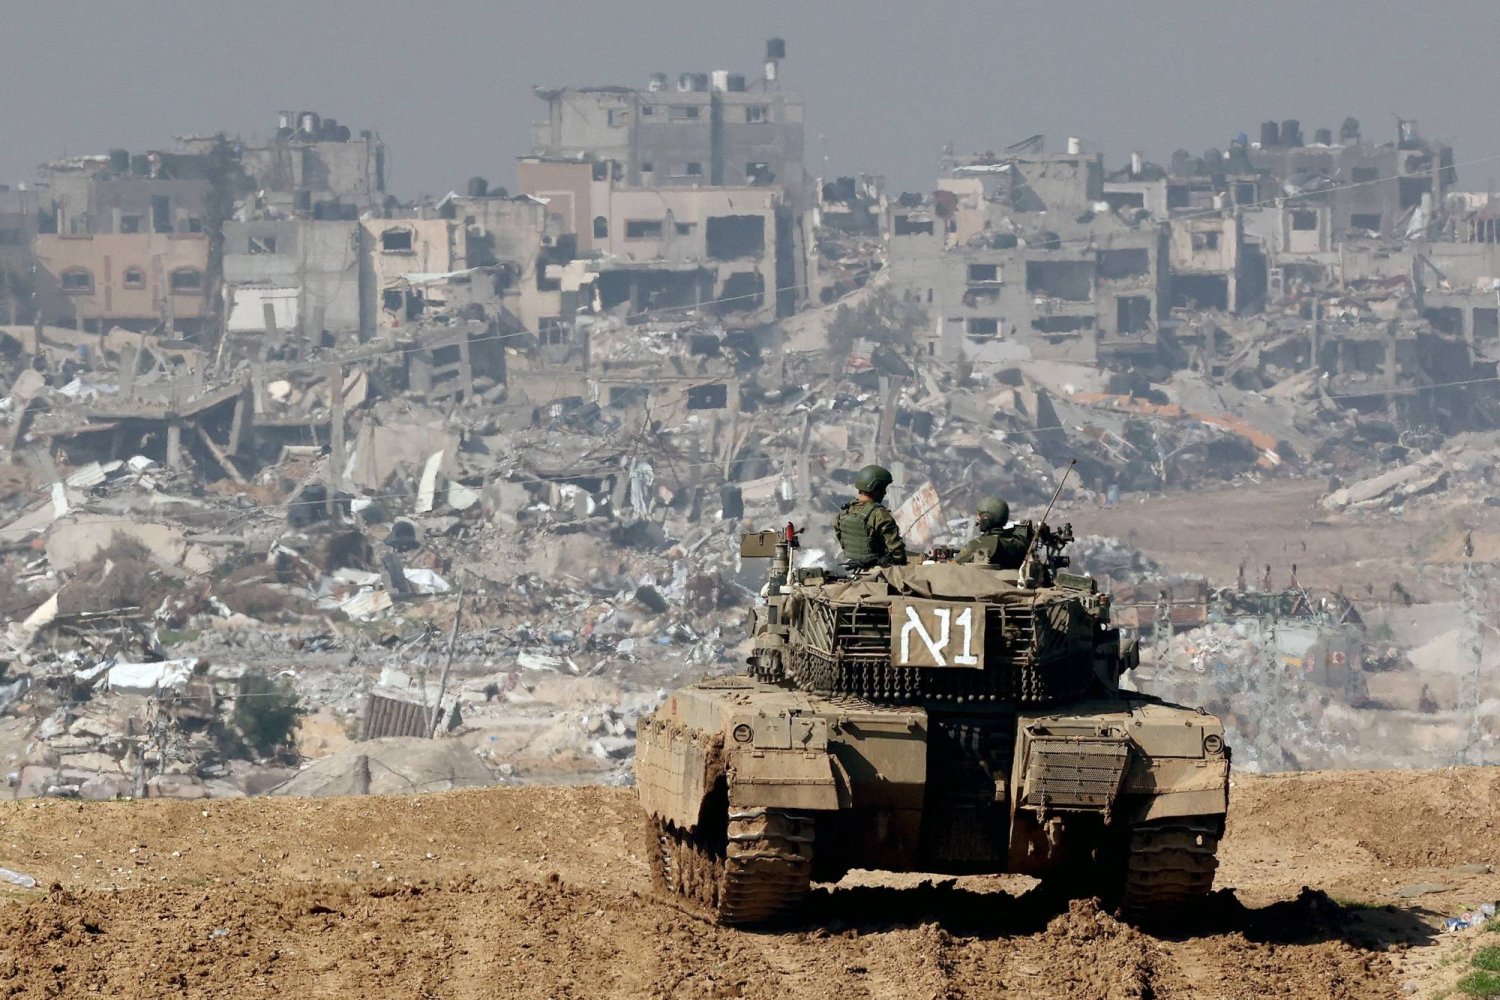 Israeli Prime Minister Netanyahu presents post-conflict plan for Gaza (Credits: Asharq Al Awsat)